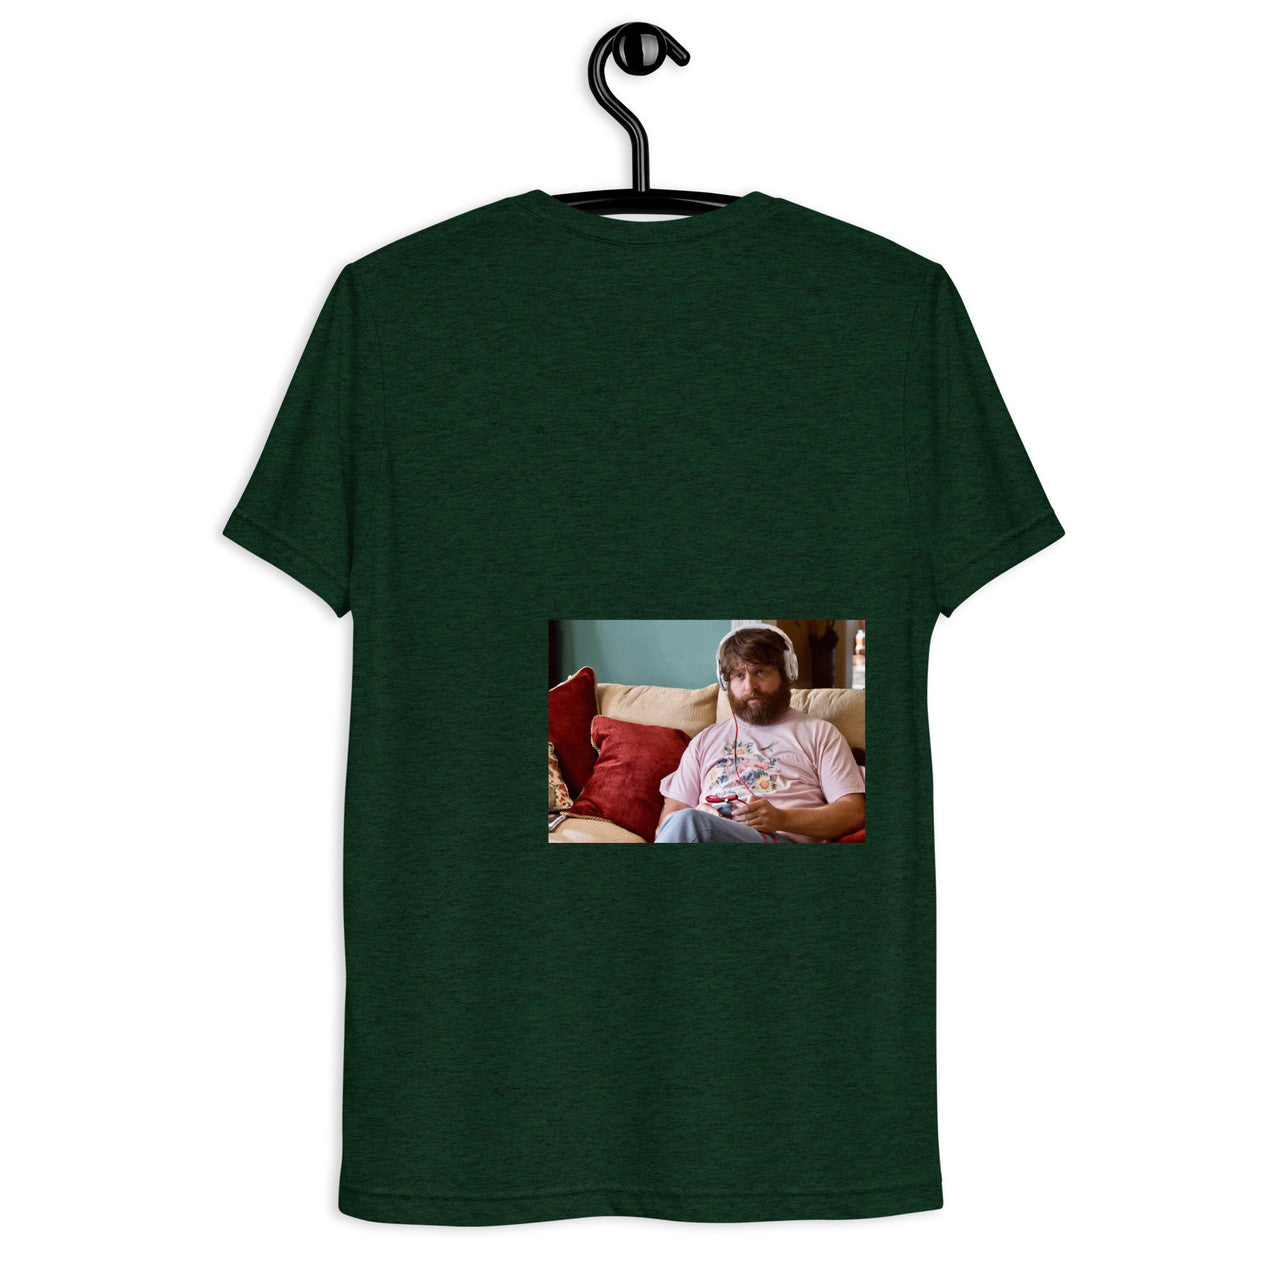 Alan Headphones KiSS Short sleeve Embroidered t-shirt - The Hangover Zach Galifianakis